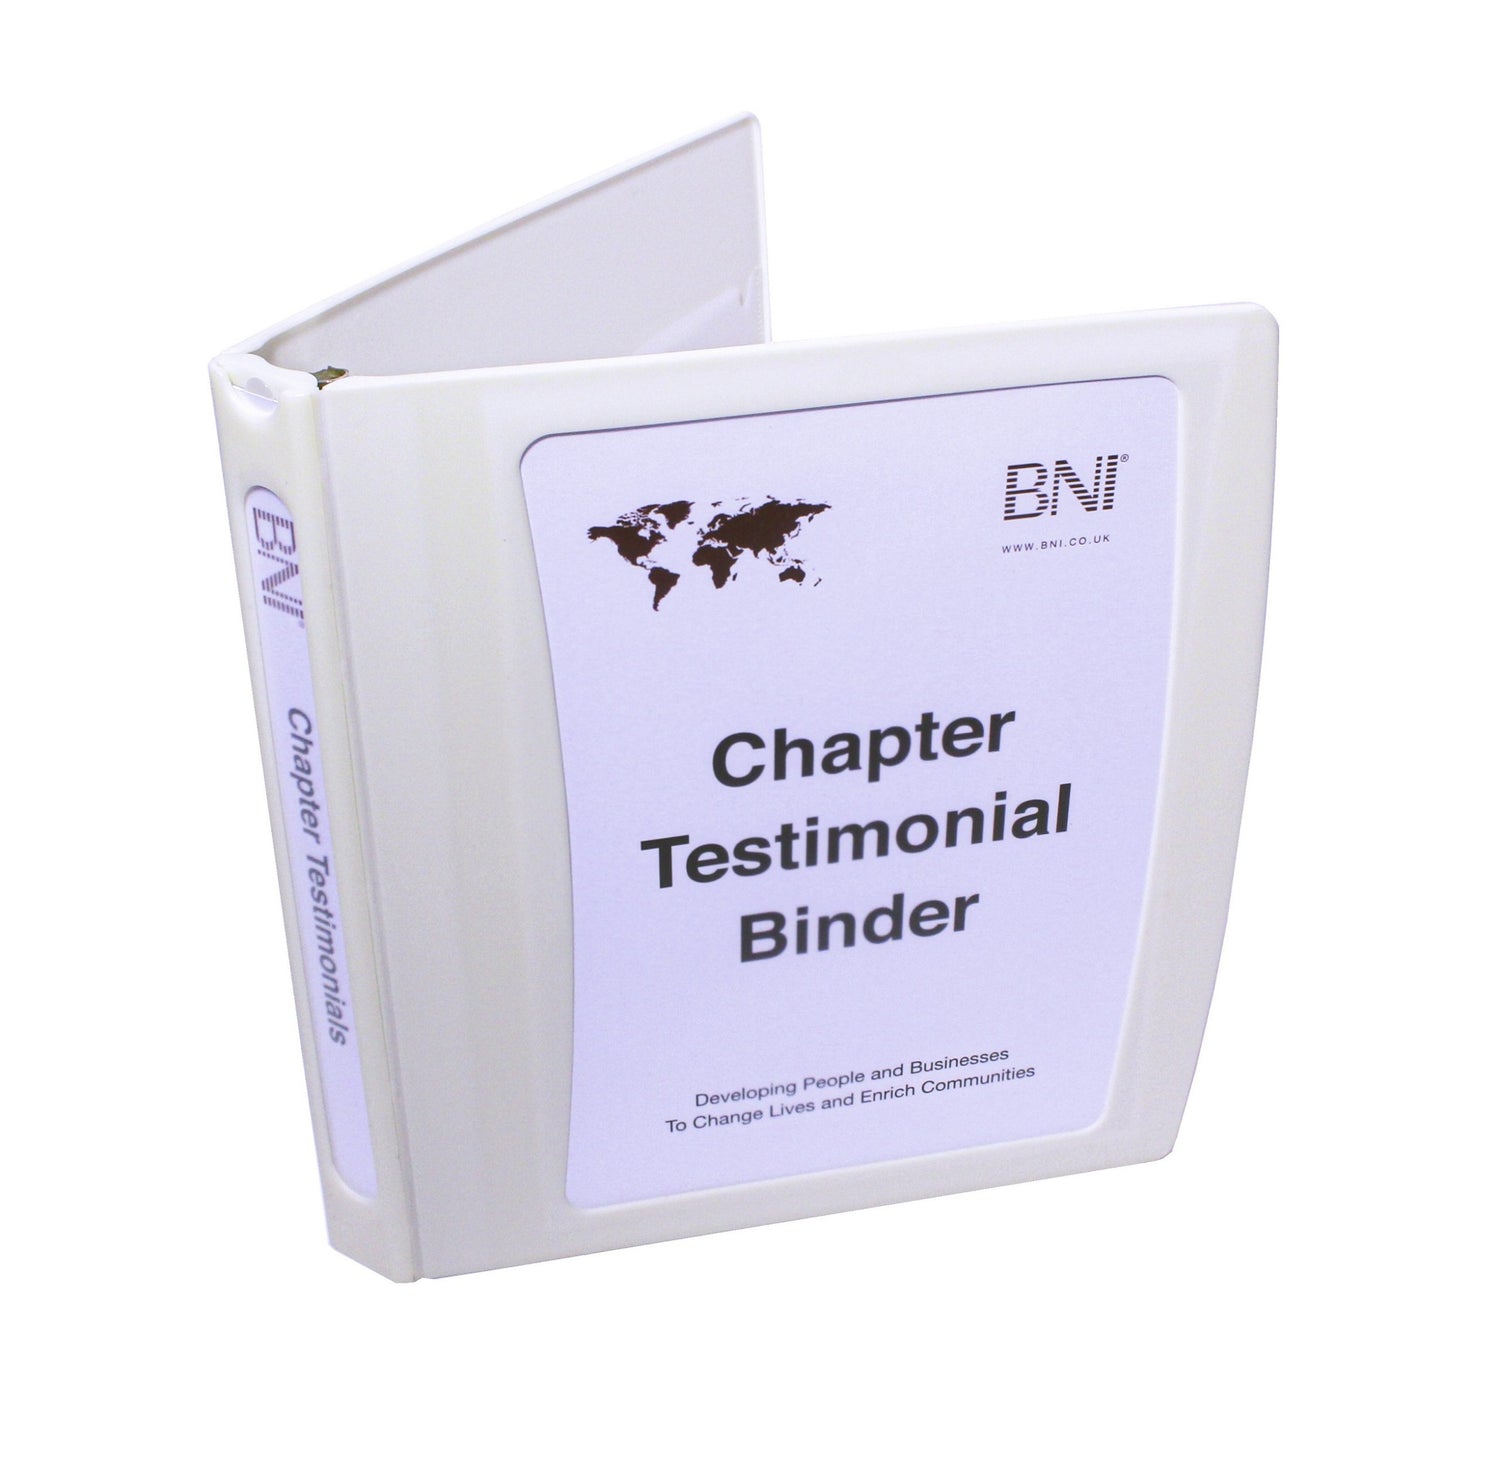 BNI Networking - Chapter Testimonial Binder Phillips Direct